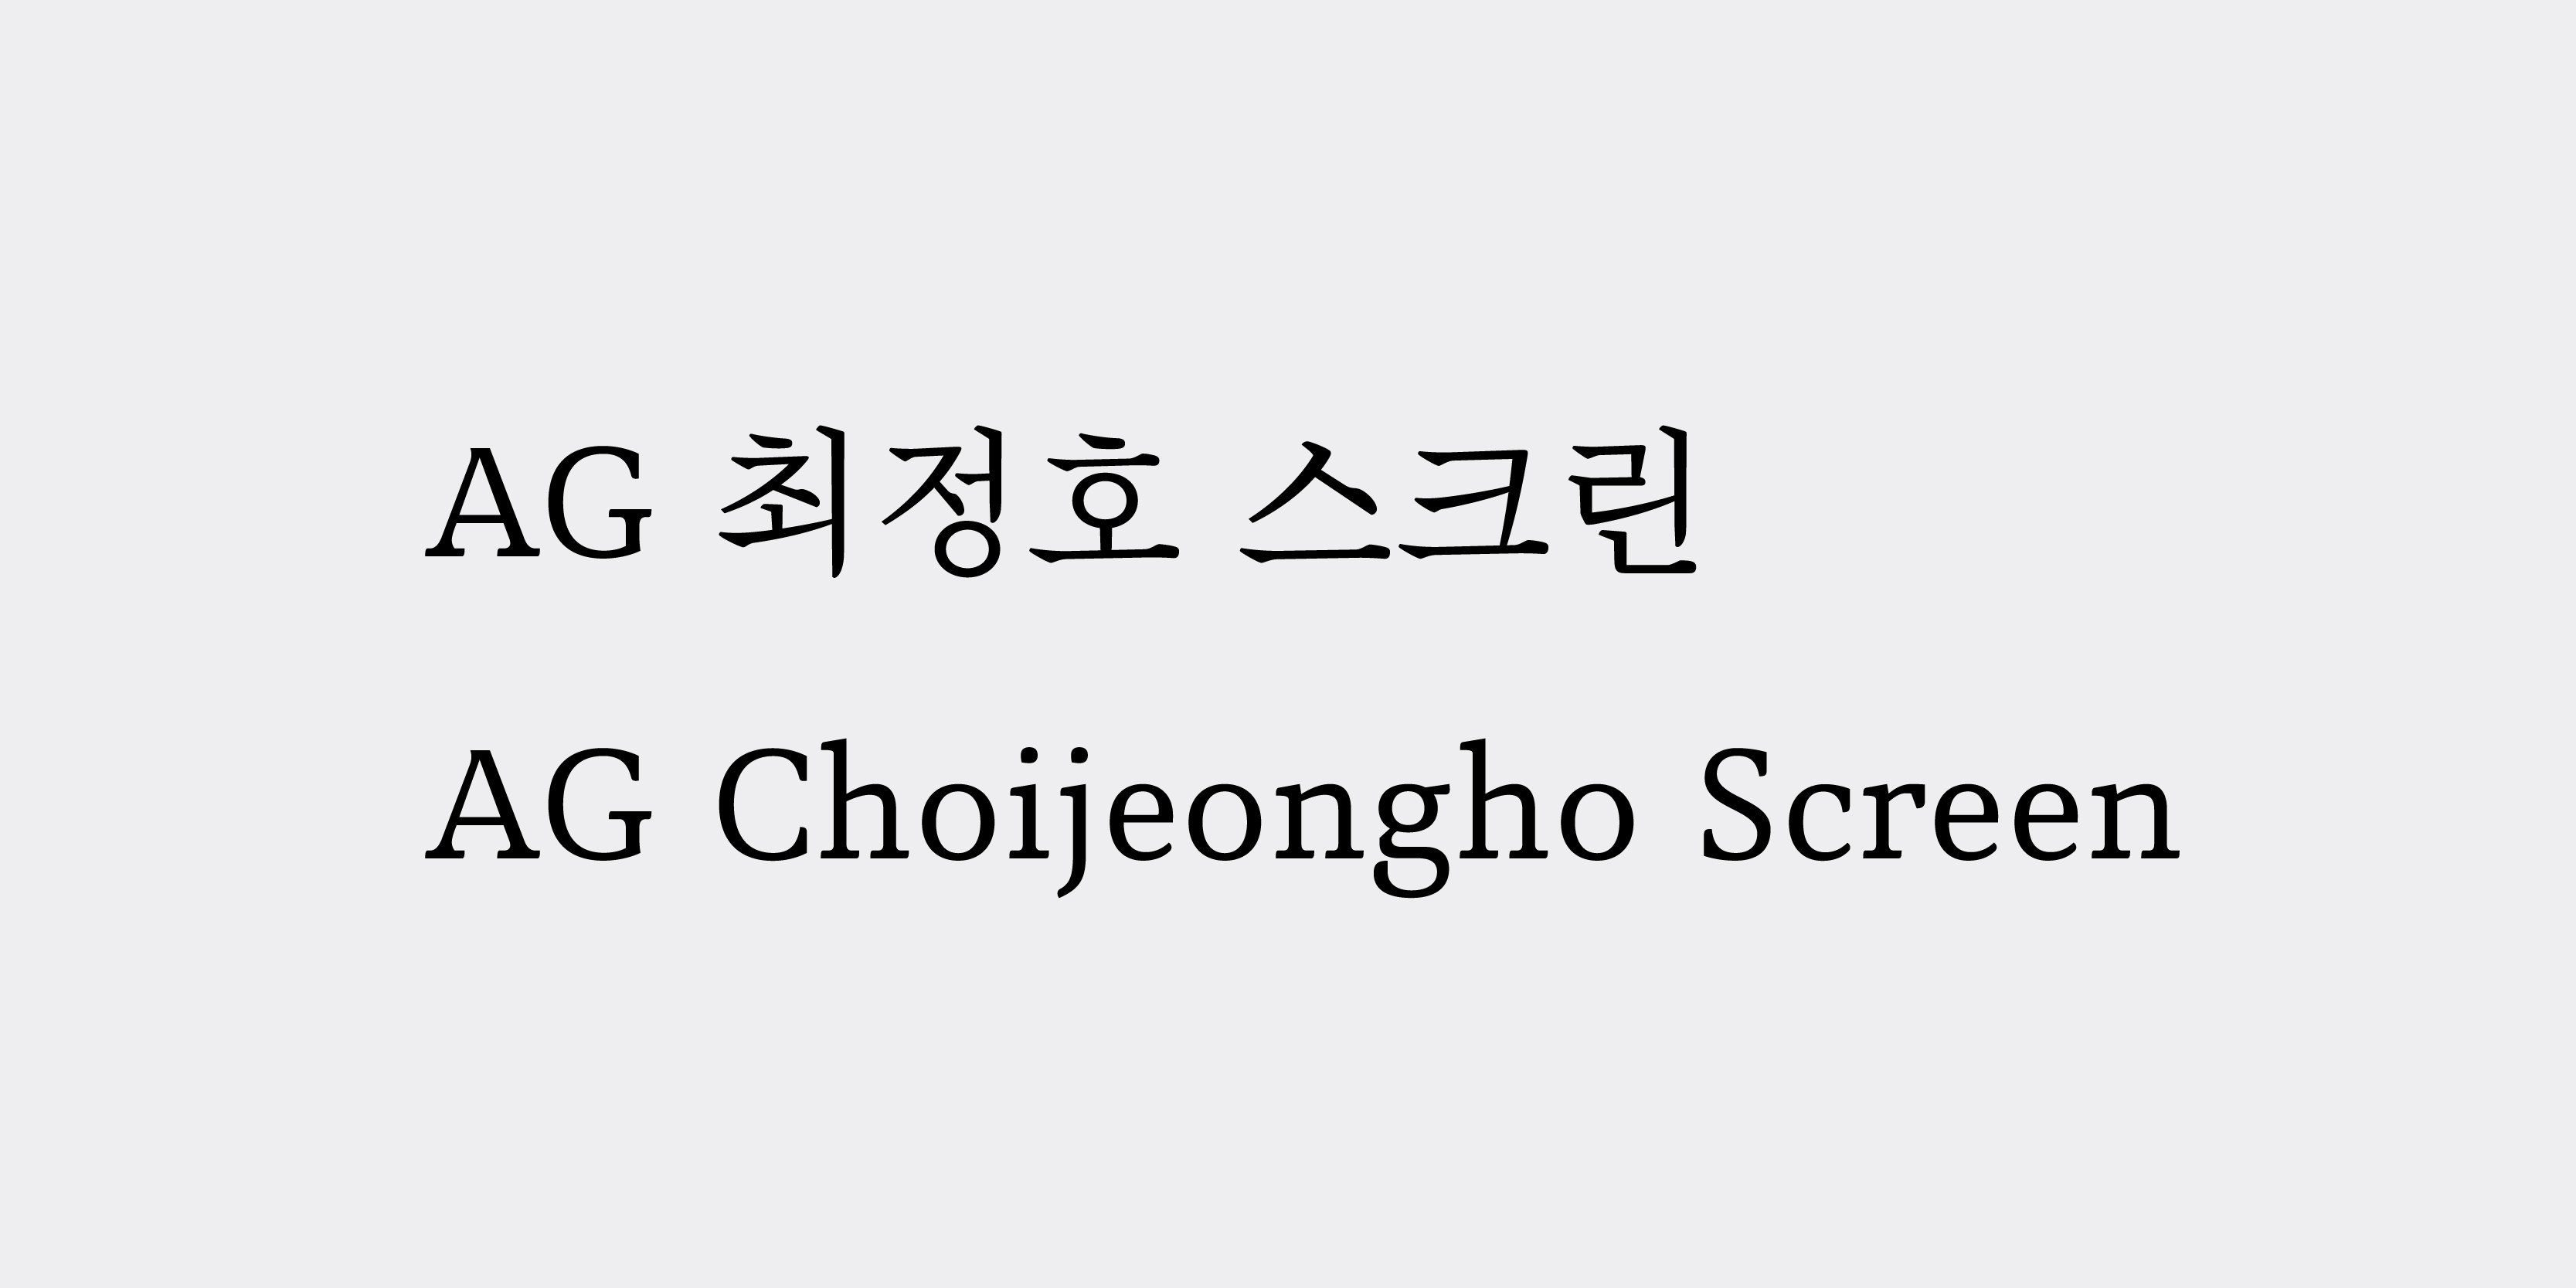 AG Choijeongho Screen | Adobe Fonts